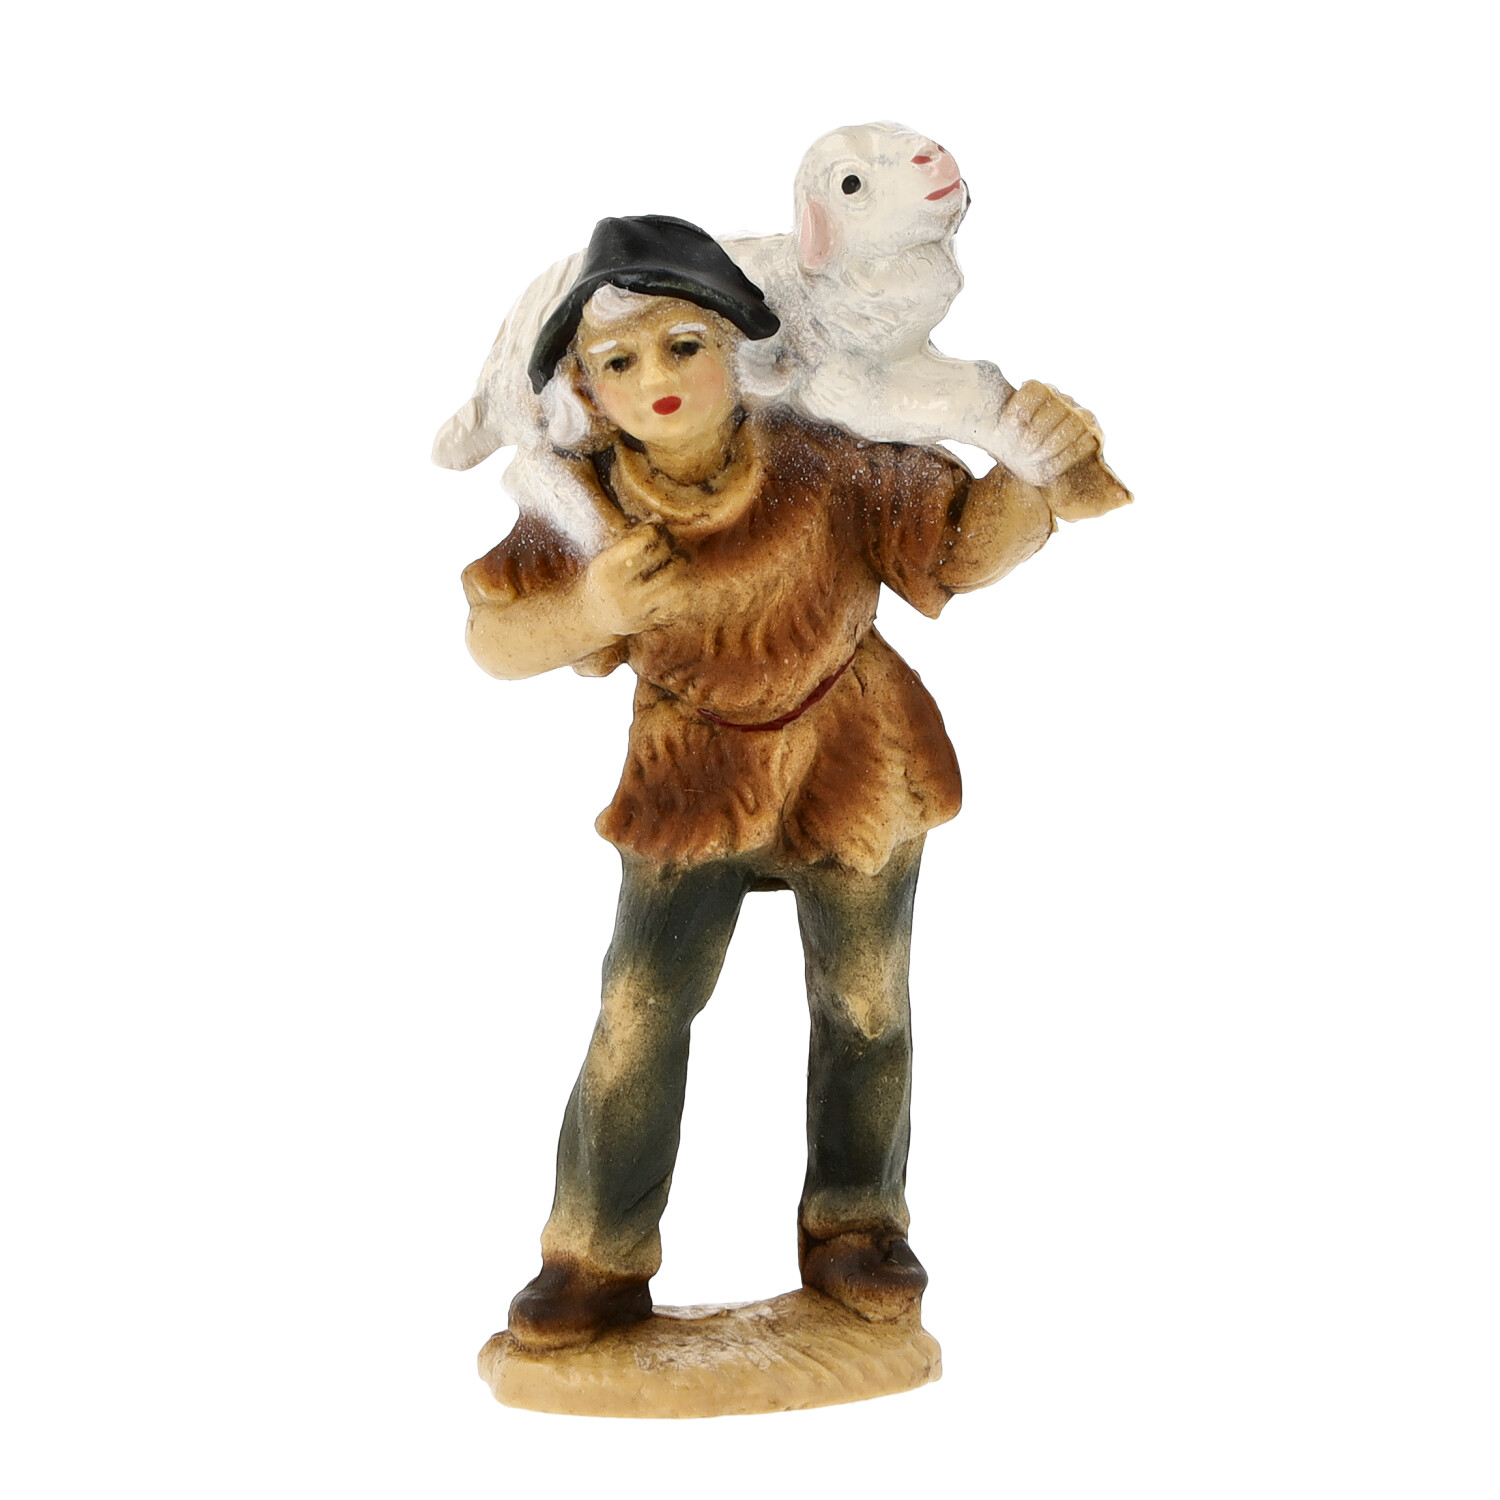 Shepherd with sheep on shoulder - Marolin Plastik - Resin Nativity figure - made in Germany